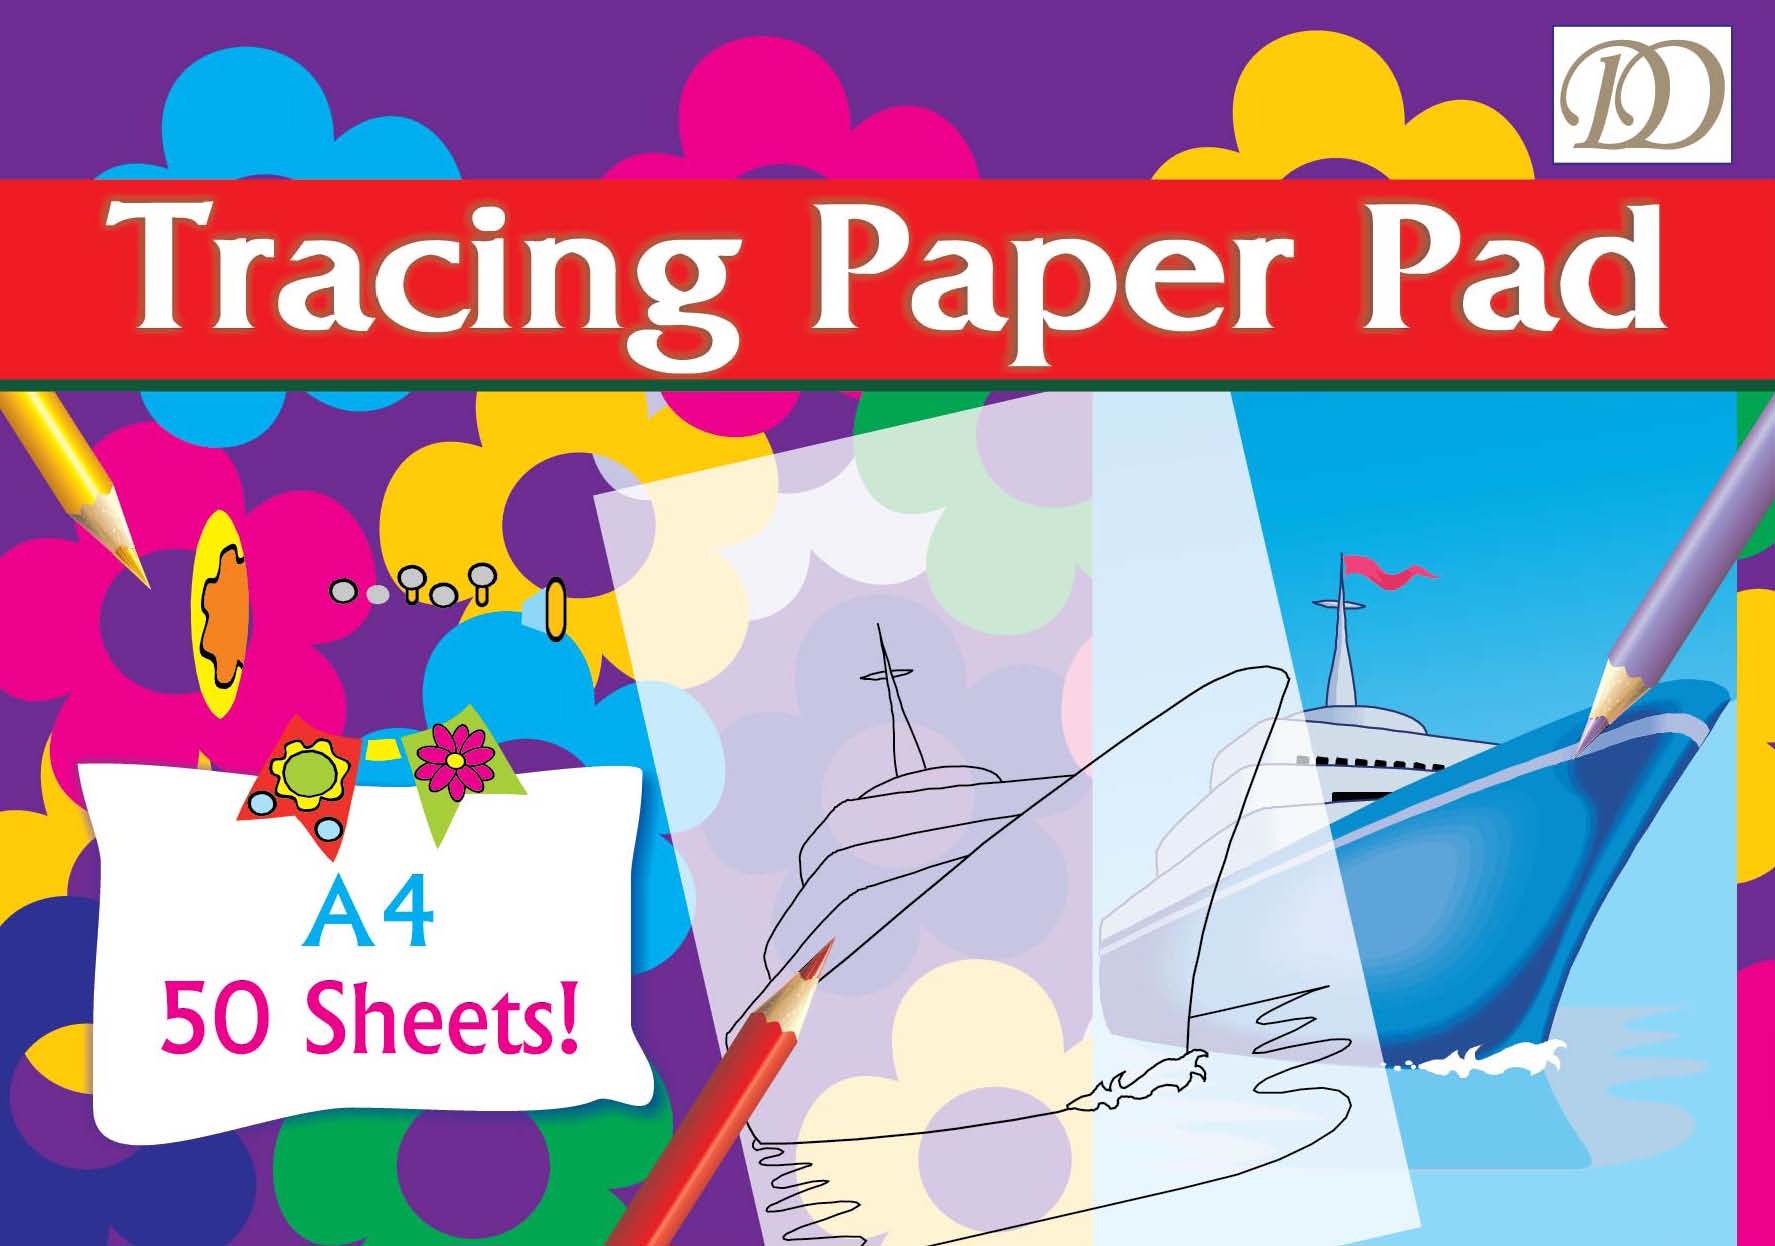 Tracing Paper Pad